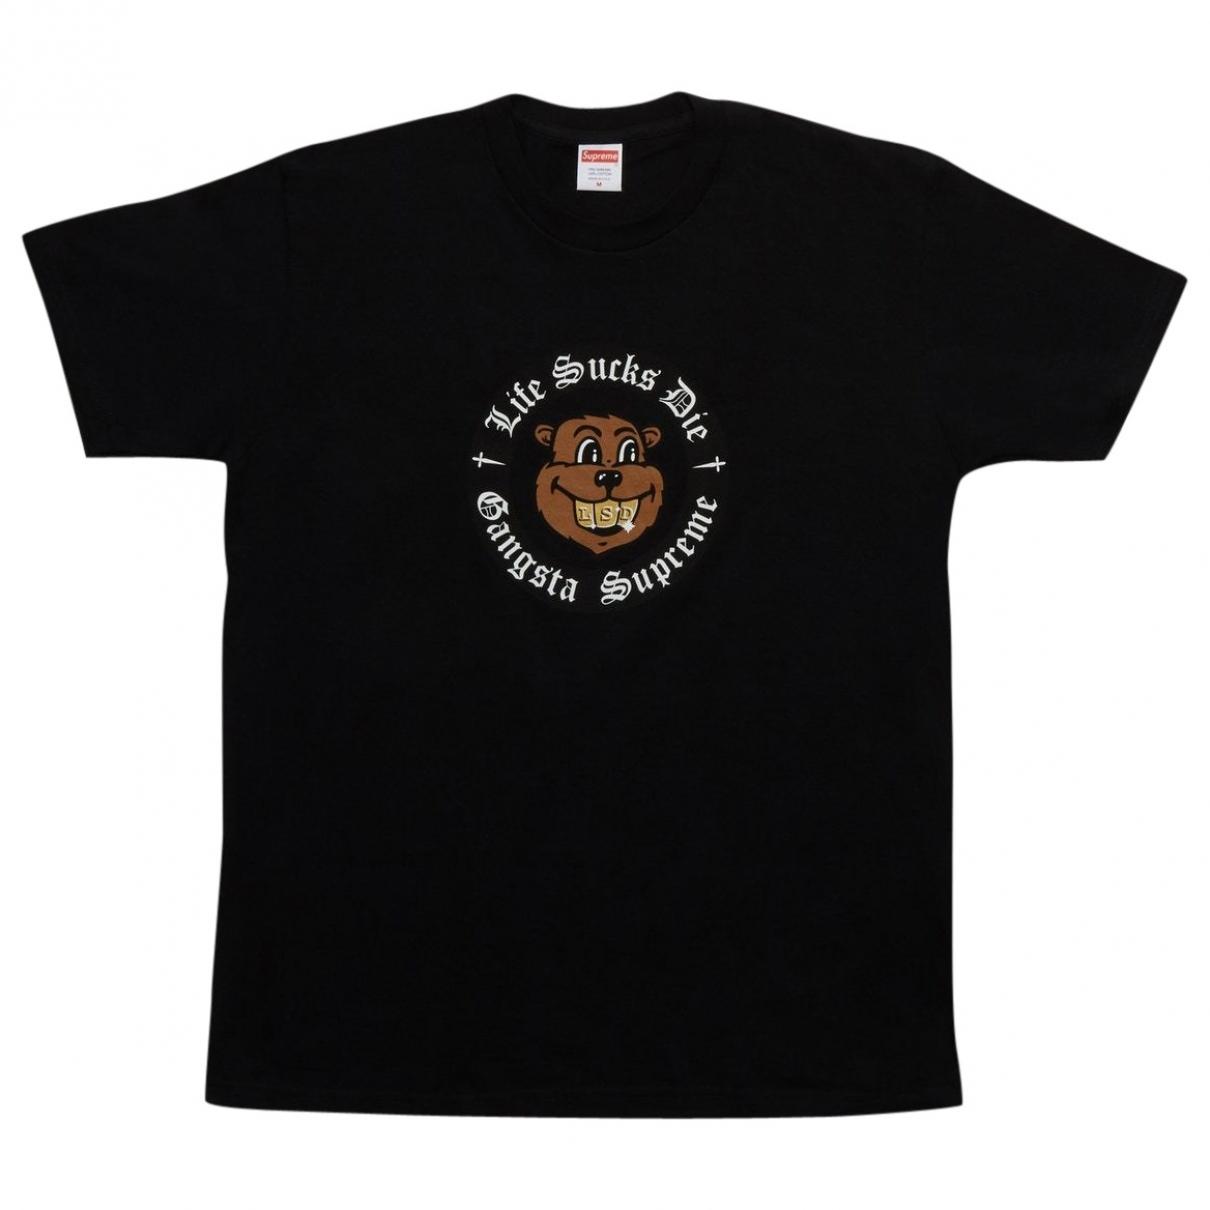 Lyst - Supreme Black Cotton T-shirts in Black for Men